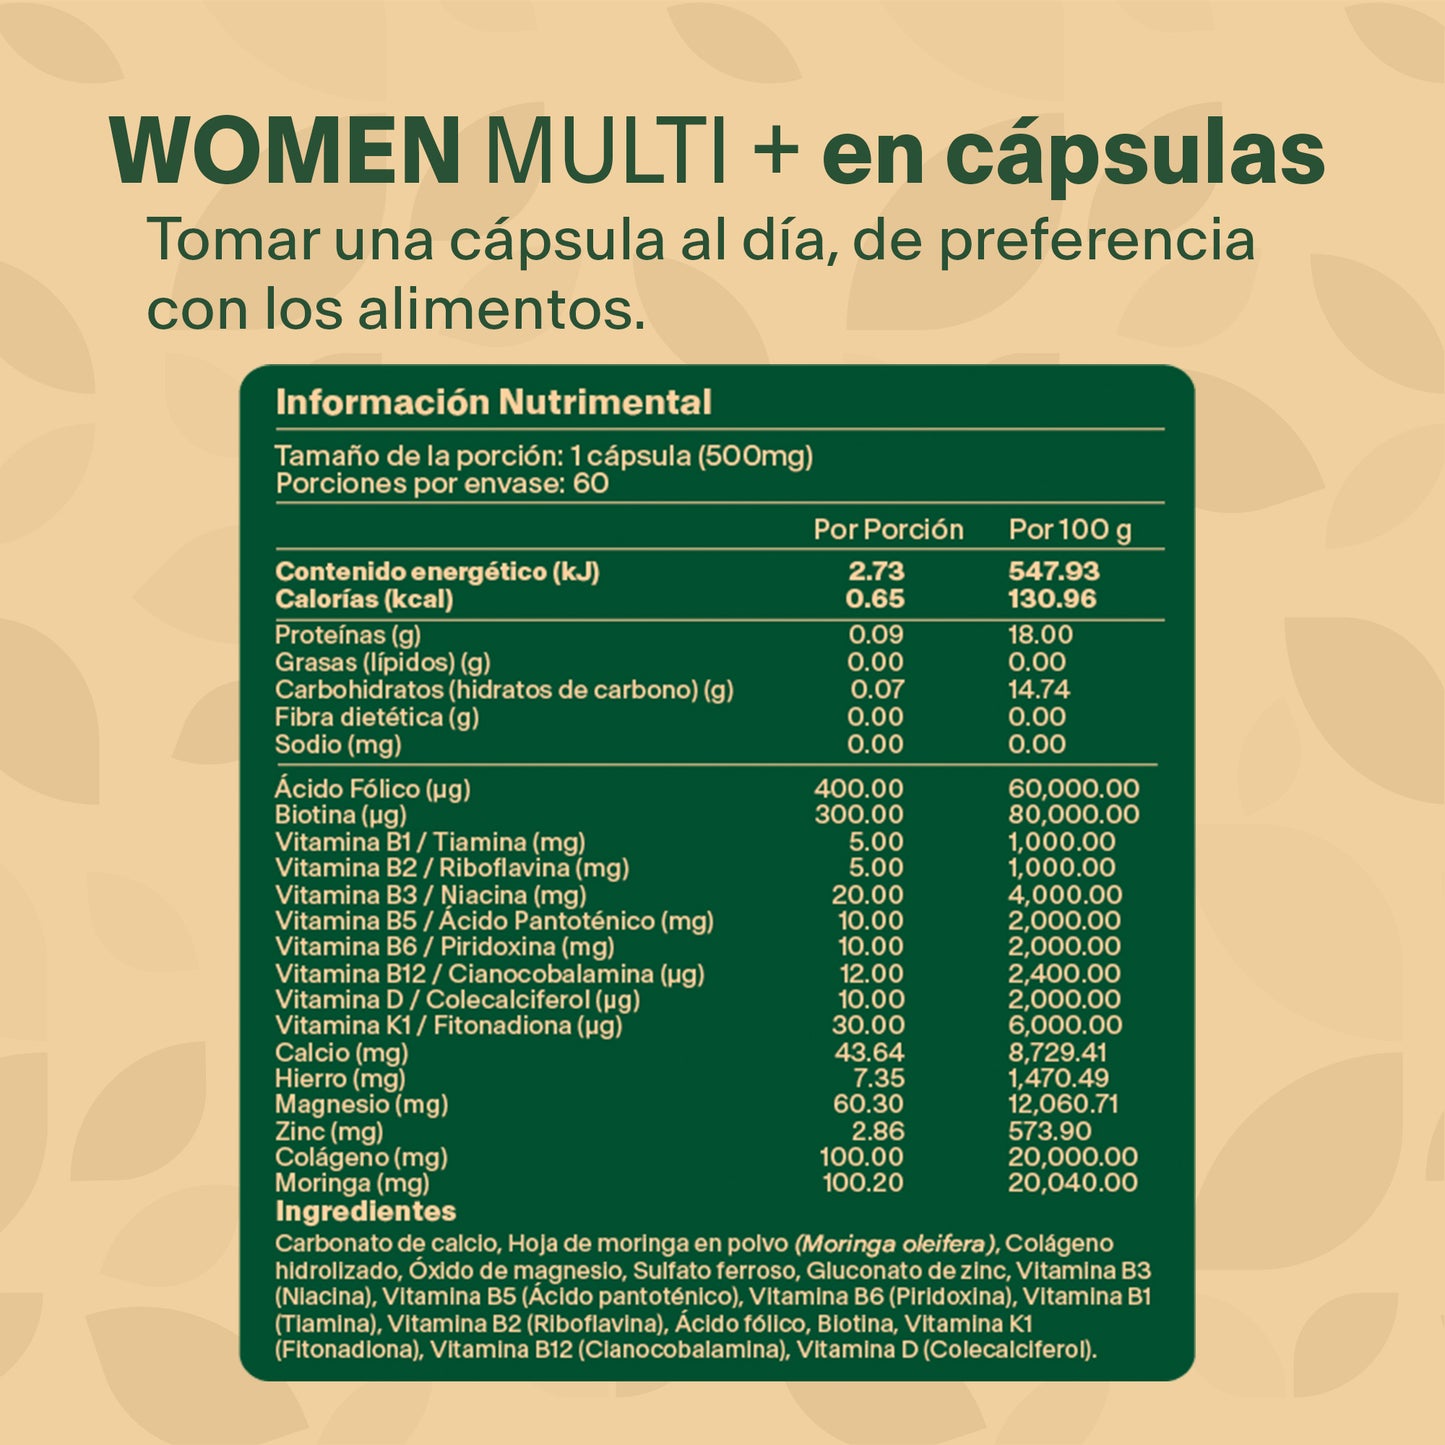 WOMEN MULTI + | Ácido Fólico, Biotina, Vitamina B1, B2, B3, B5, B6, B12, D, K1, Calcio, Hierro, Magnesio, Zinc, Colágeno y Moringa